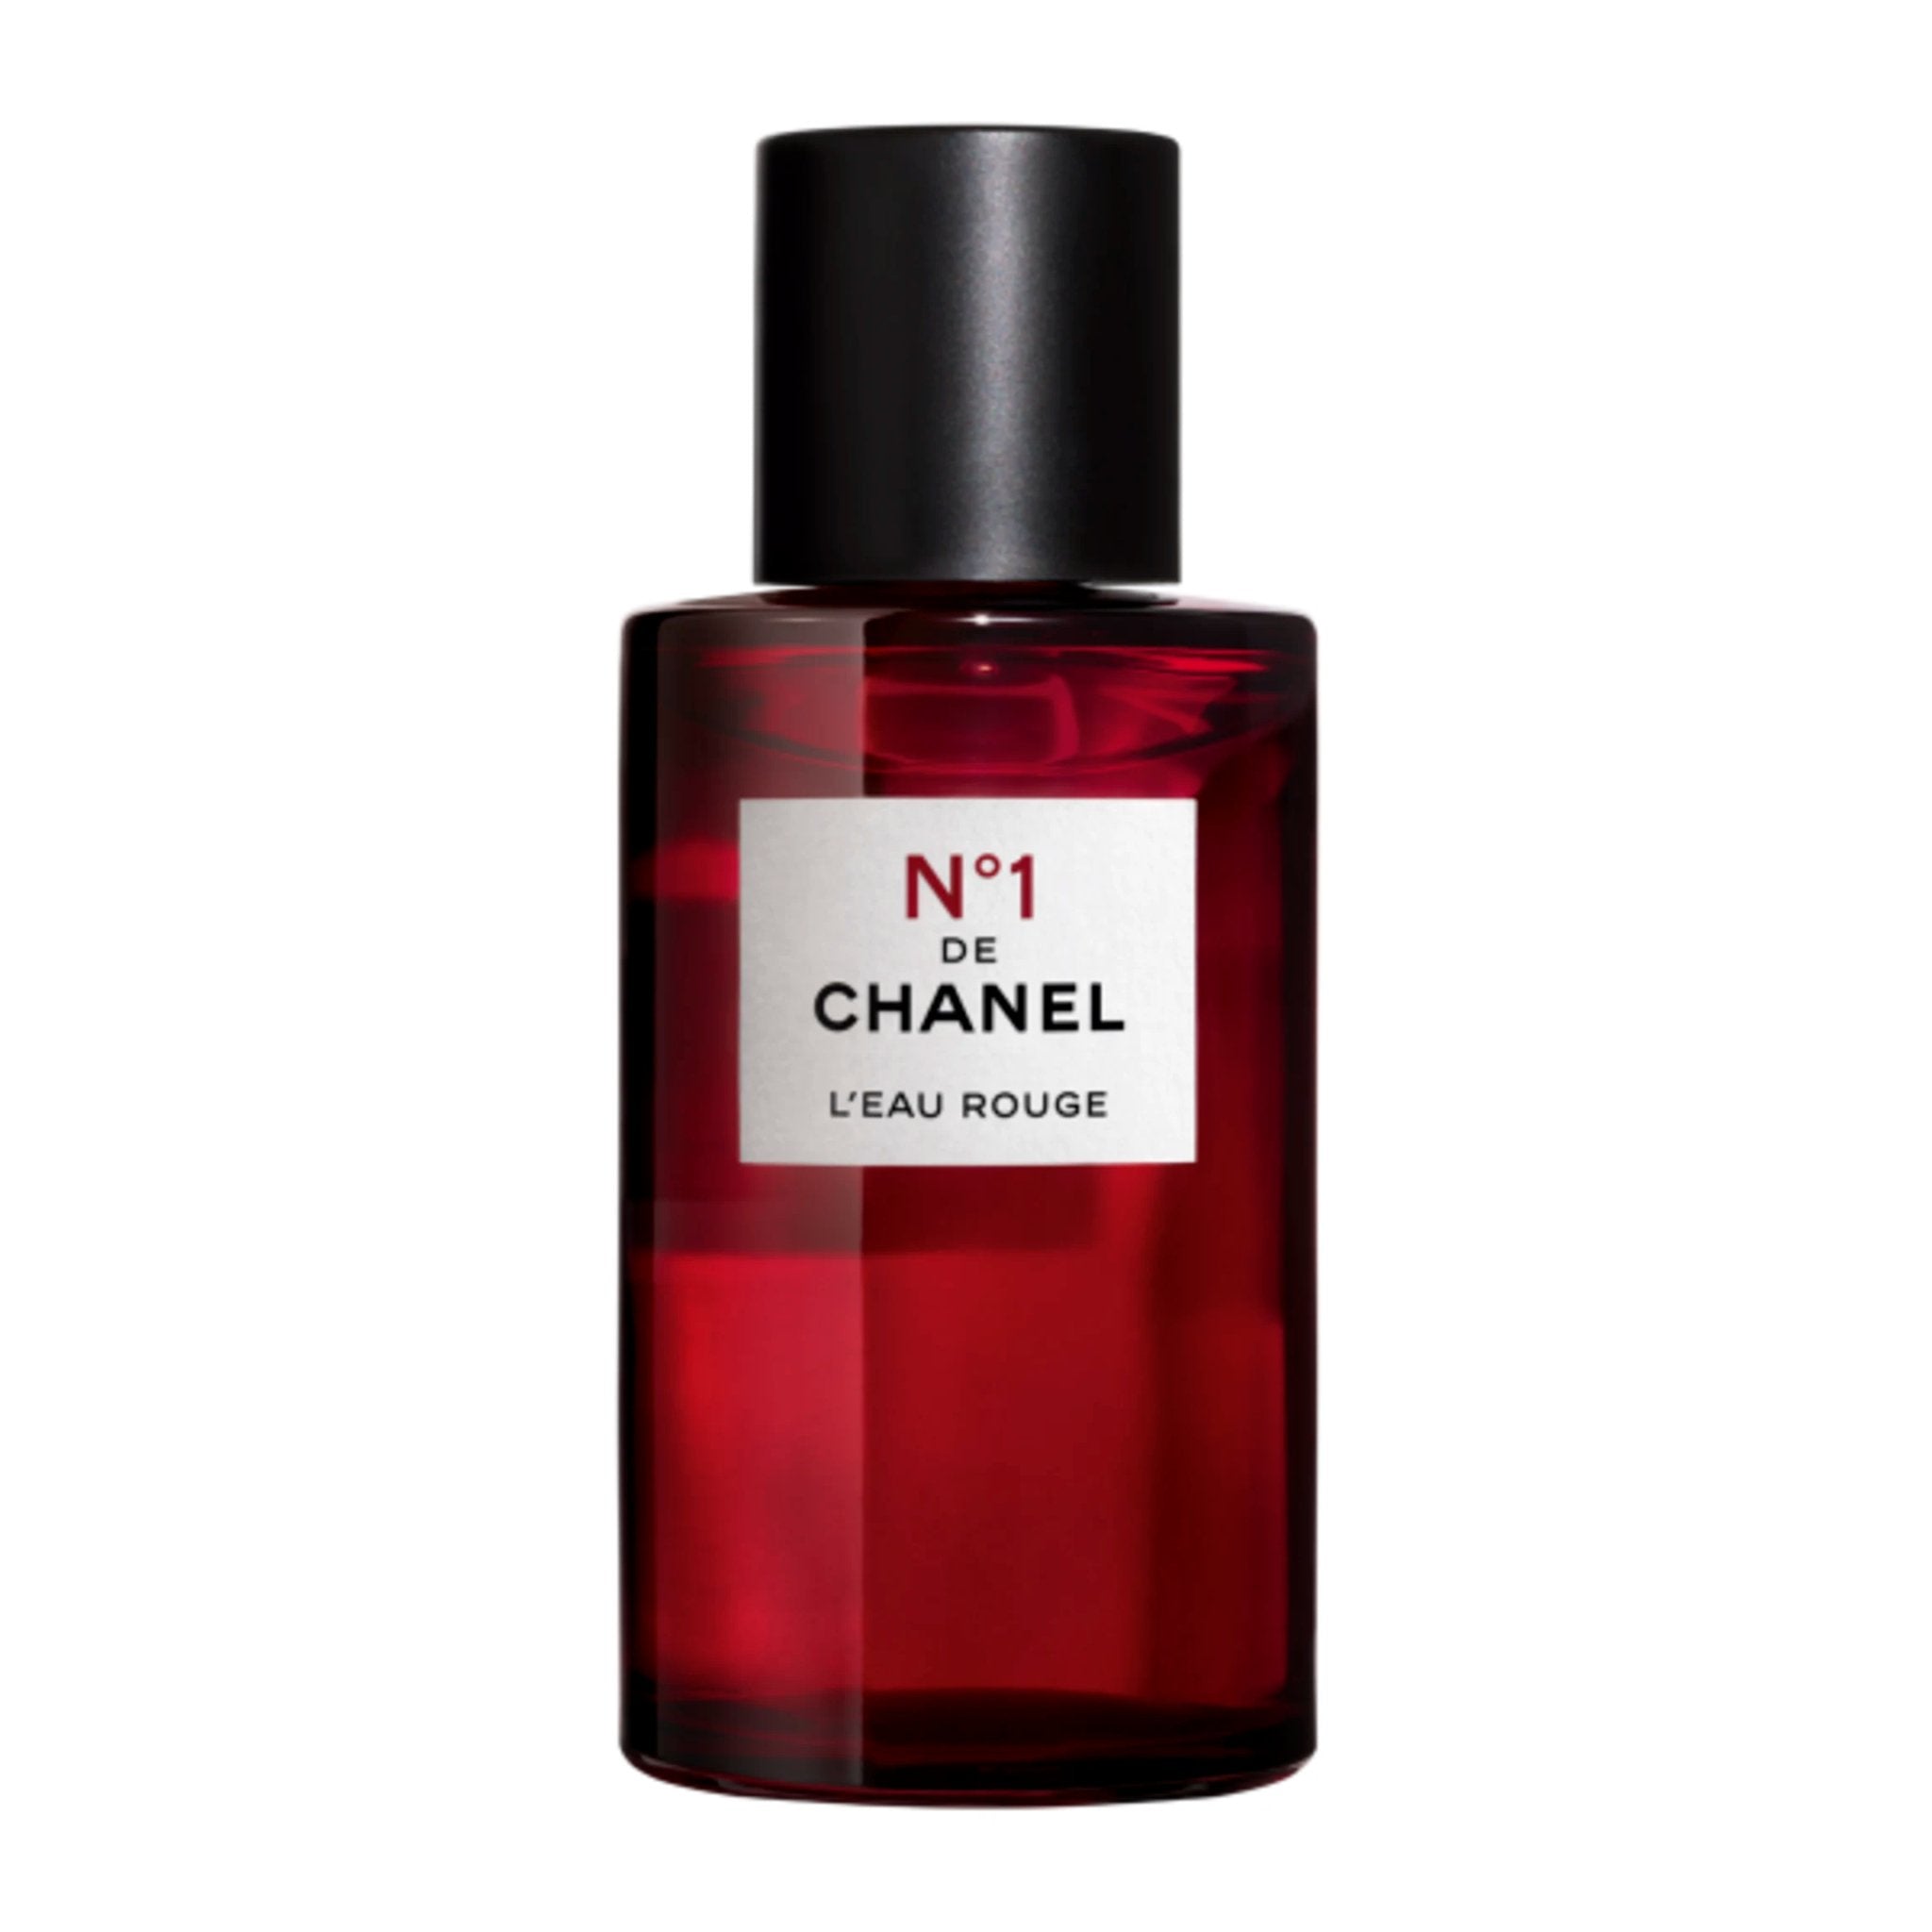 Shop for samples of Coco Mademoiselle (Eau de Parfum) by Chanel